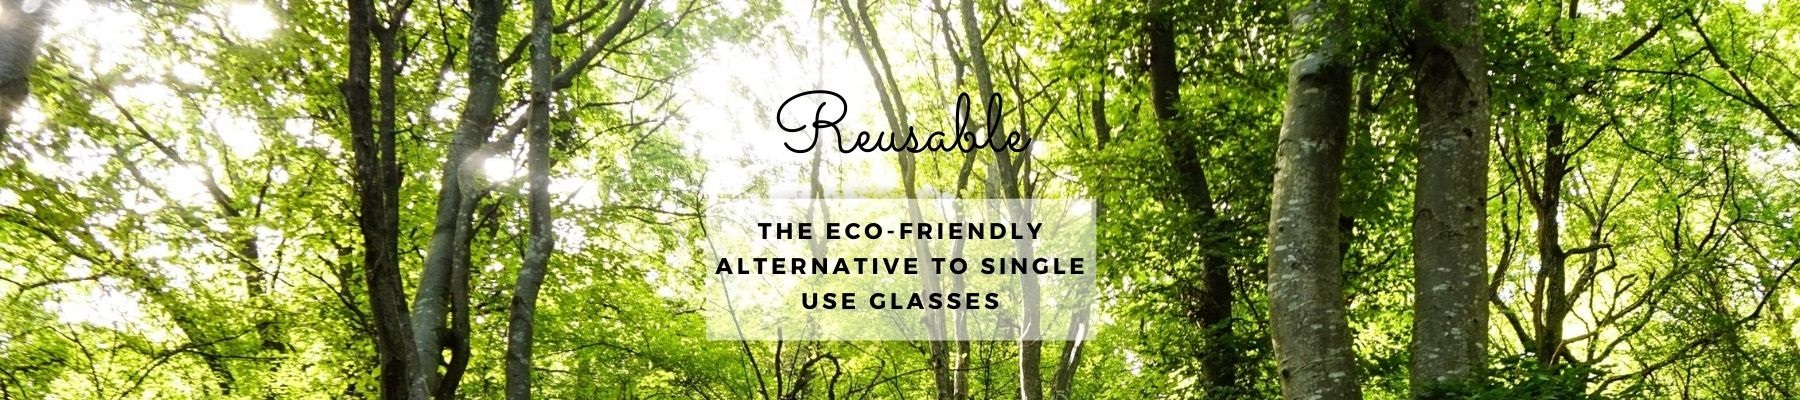 Environmentally Friendly Reusable Plastic Glasses